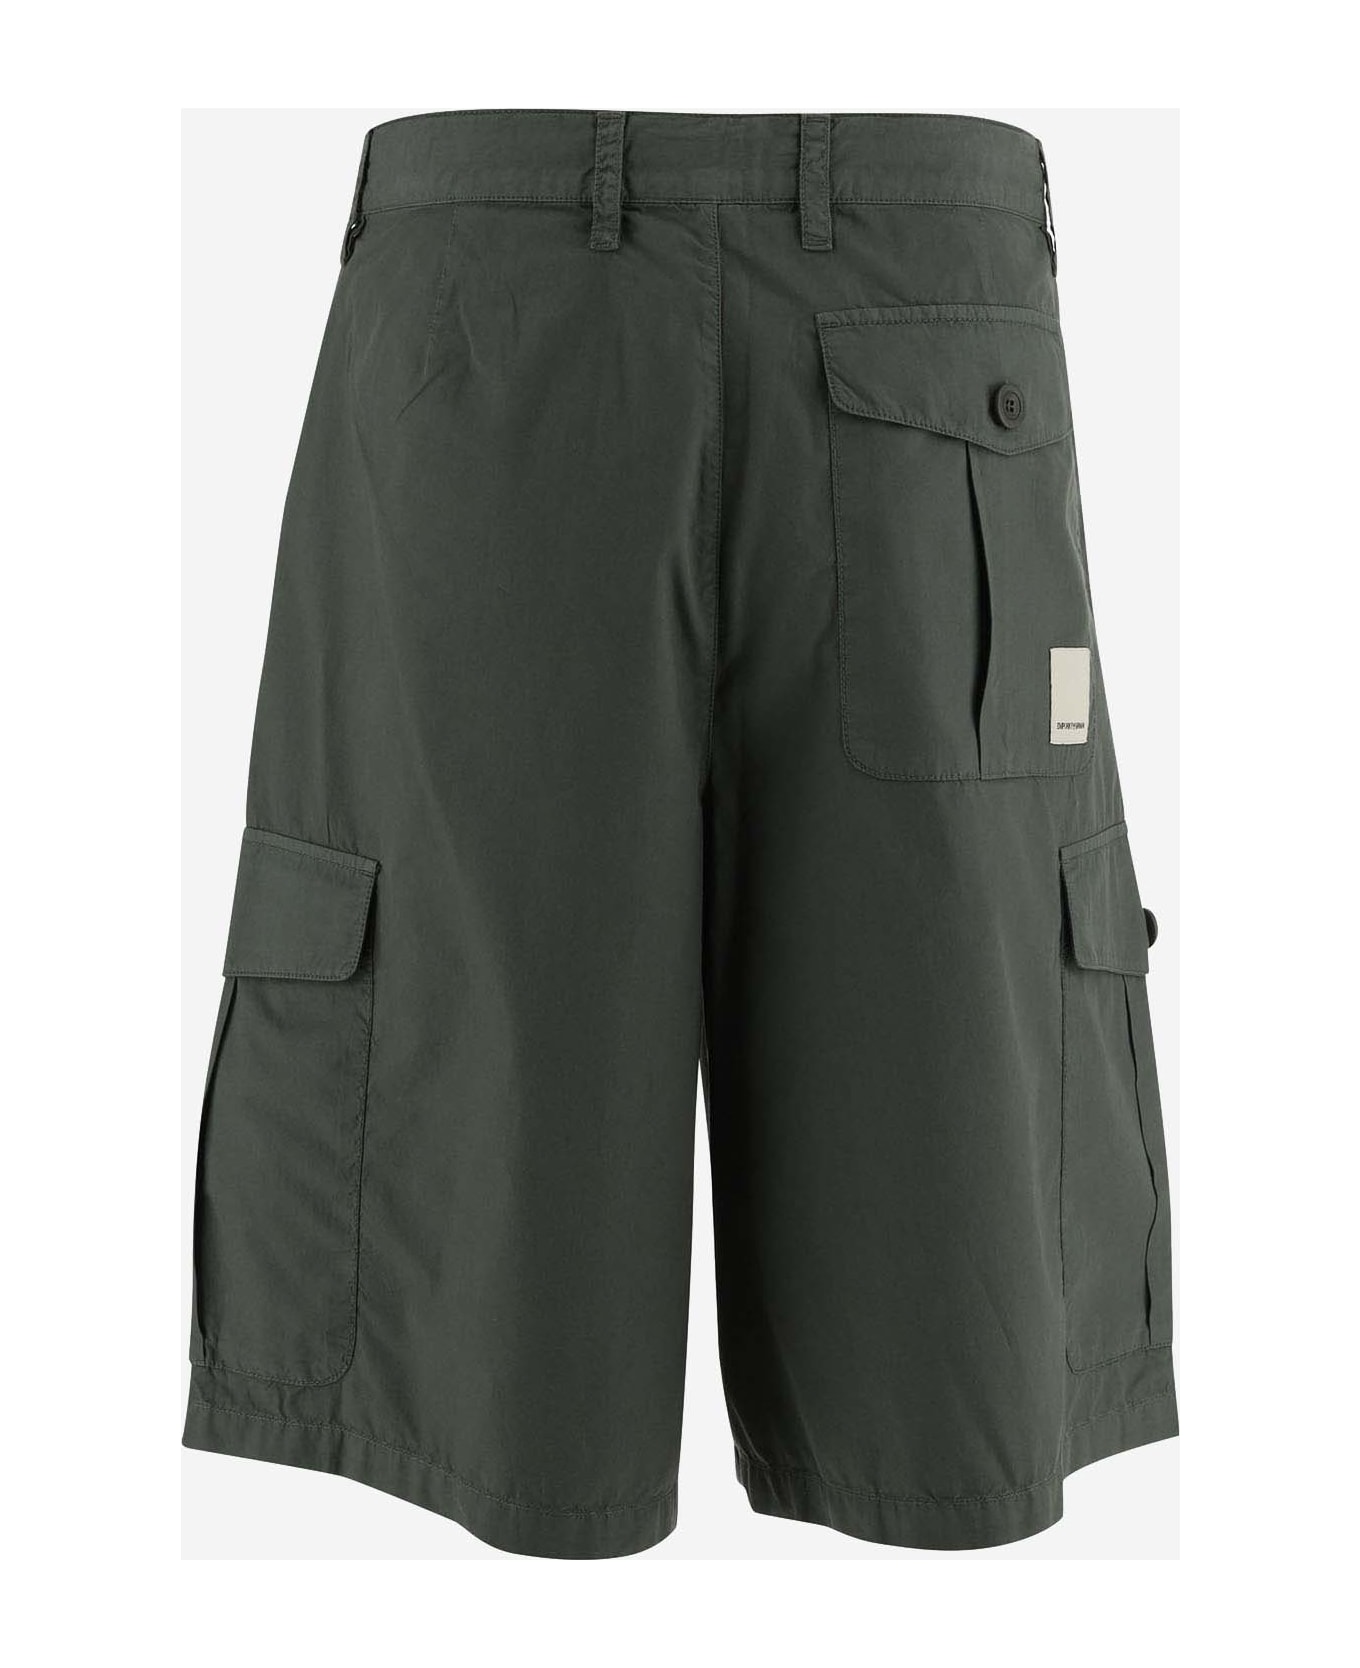 Emporio Armani Cotton Bermuda Shorts - 05C1